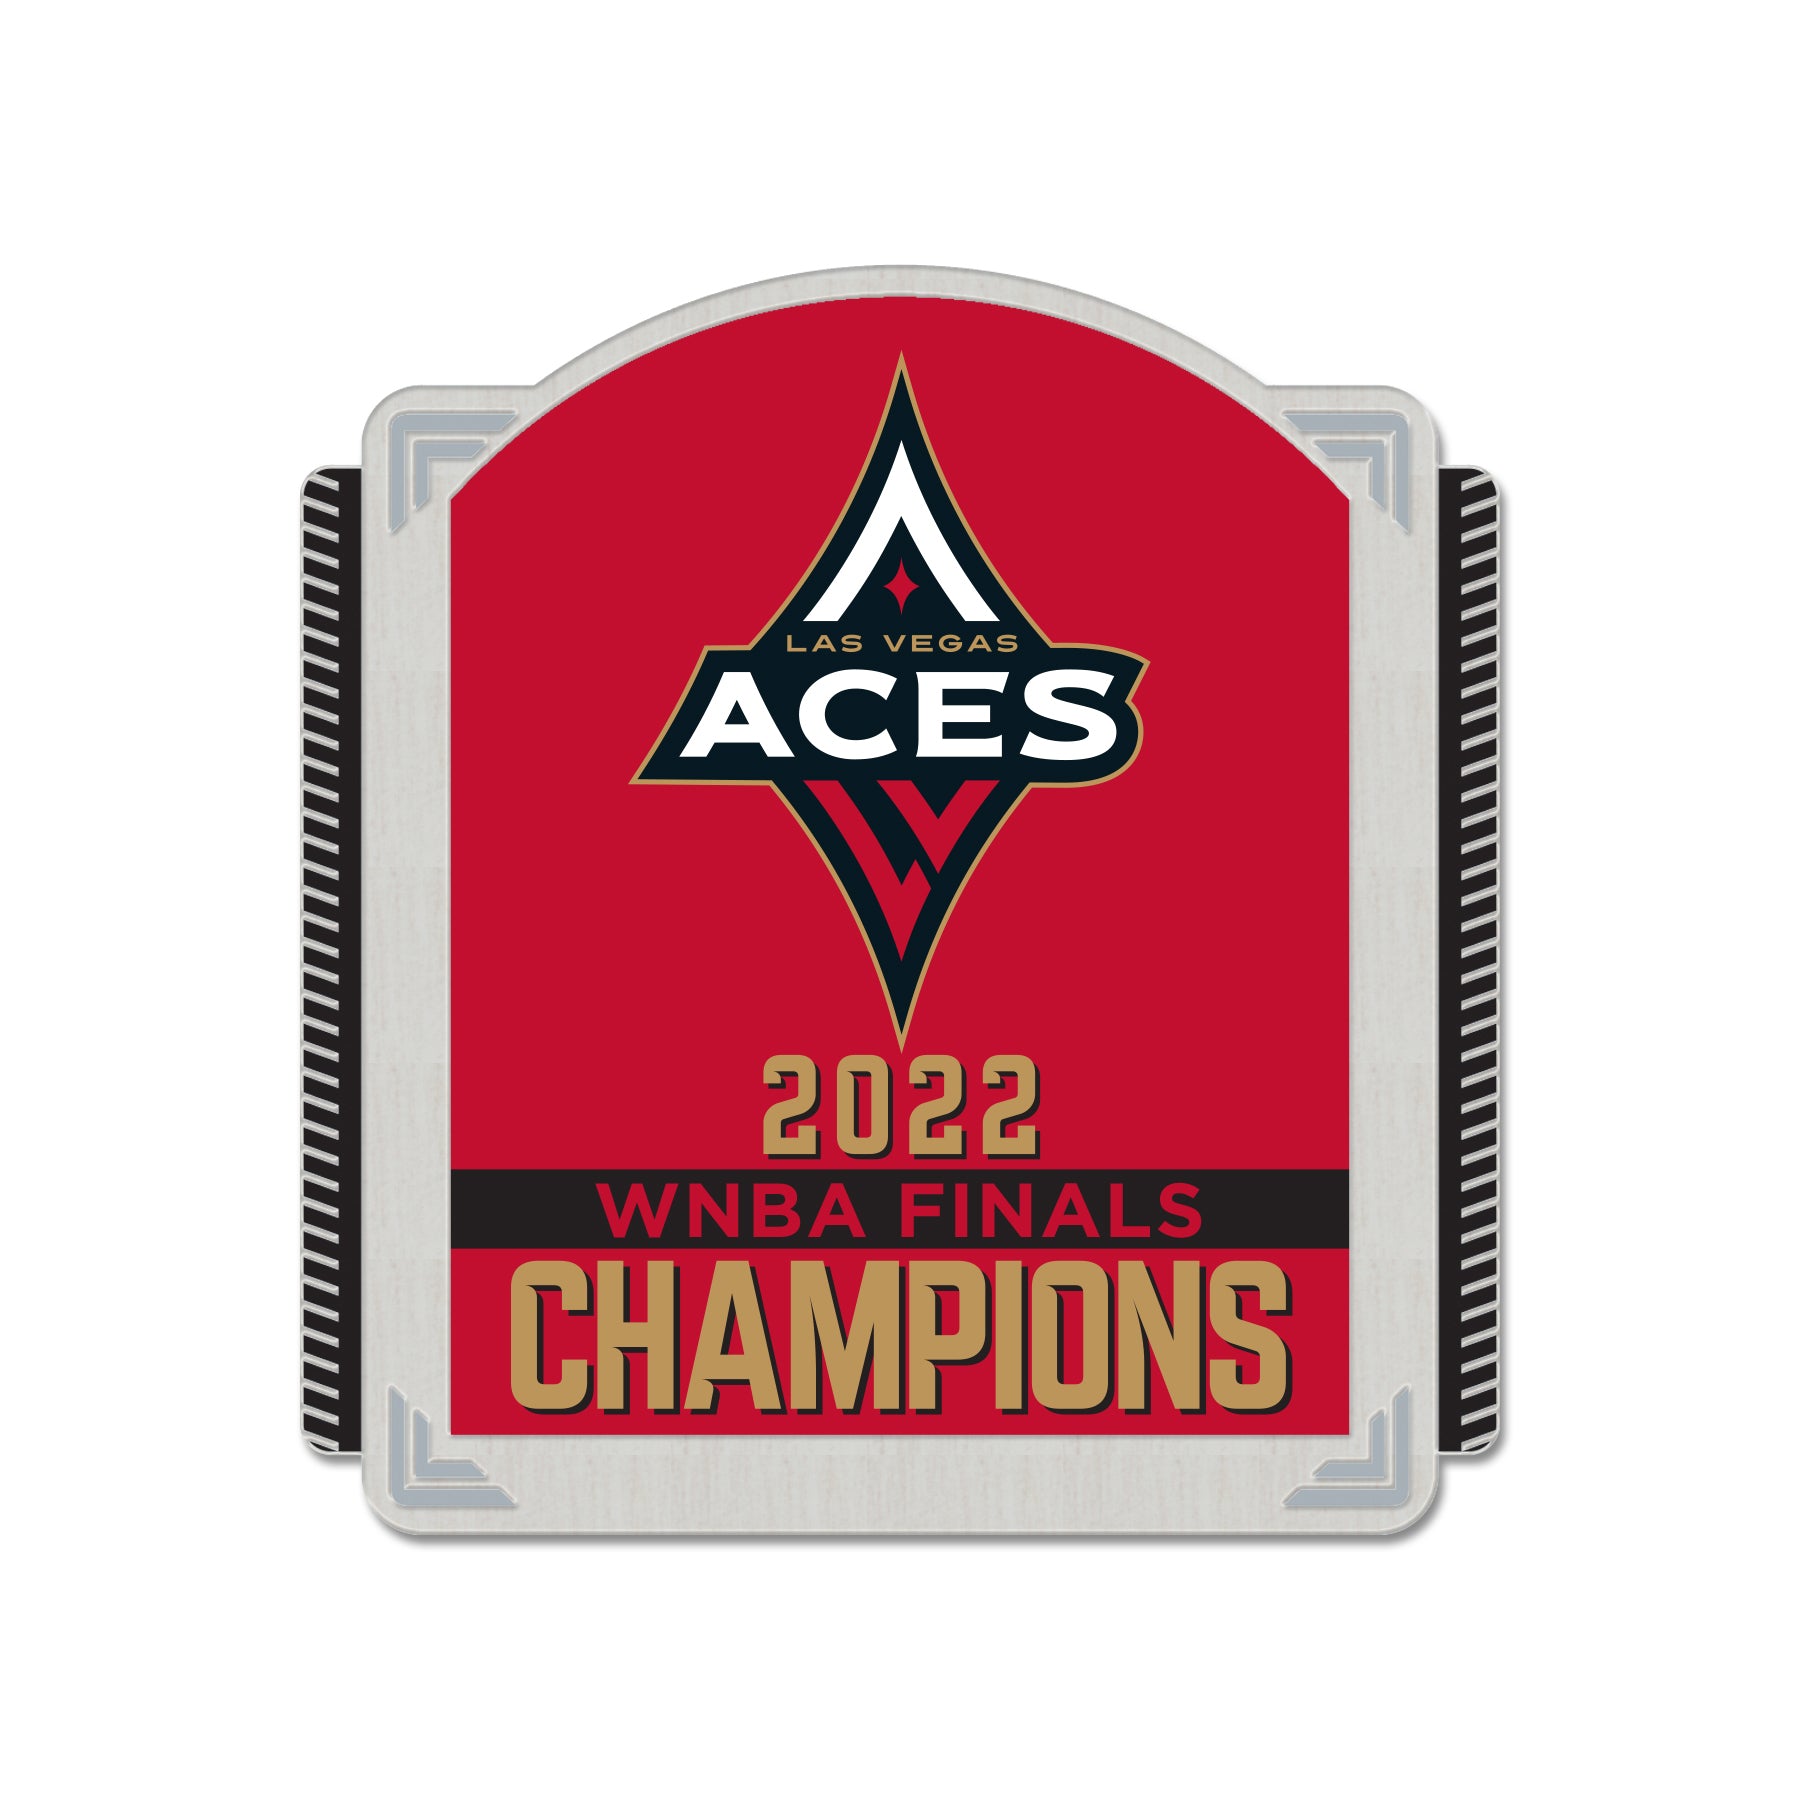 WinCraft Las Vegas Aces 2022 WNBA Finals Champions License Plate Frame